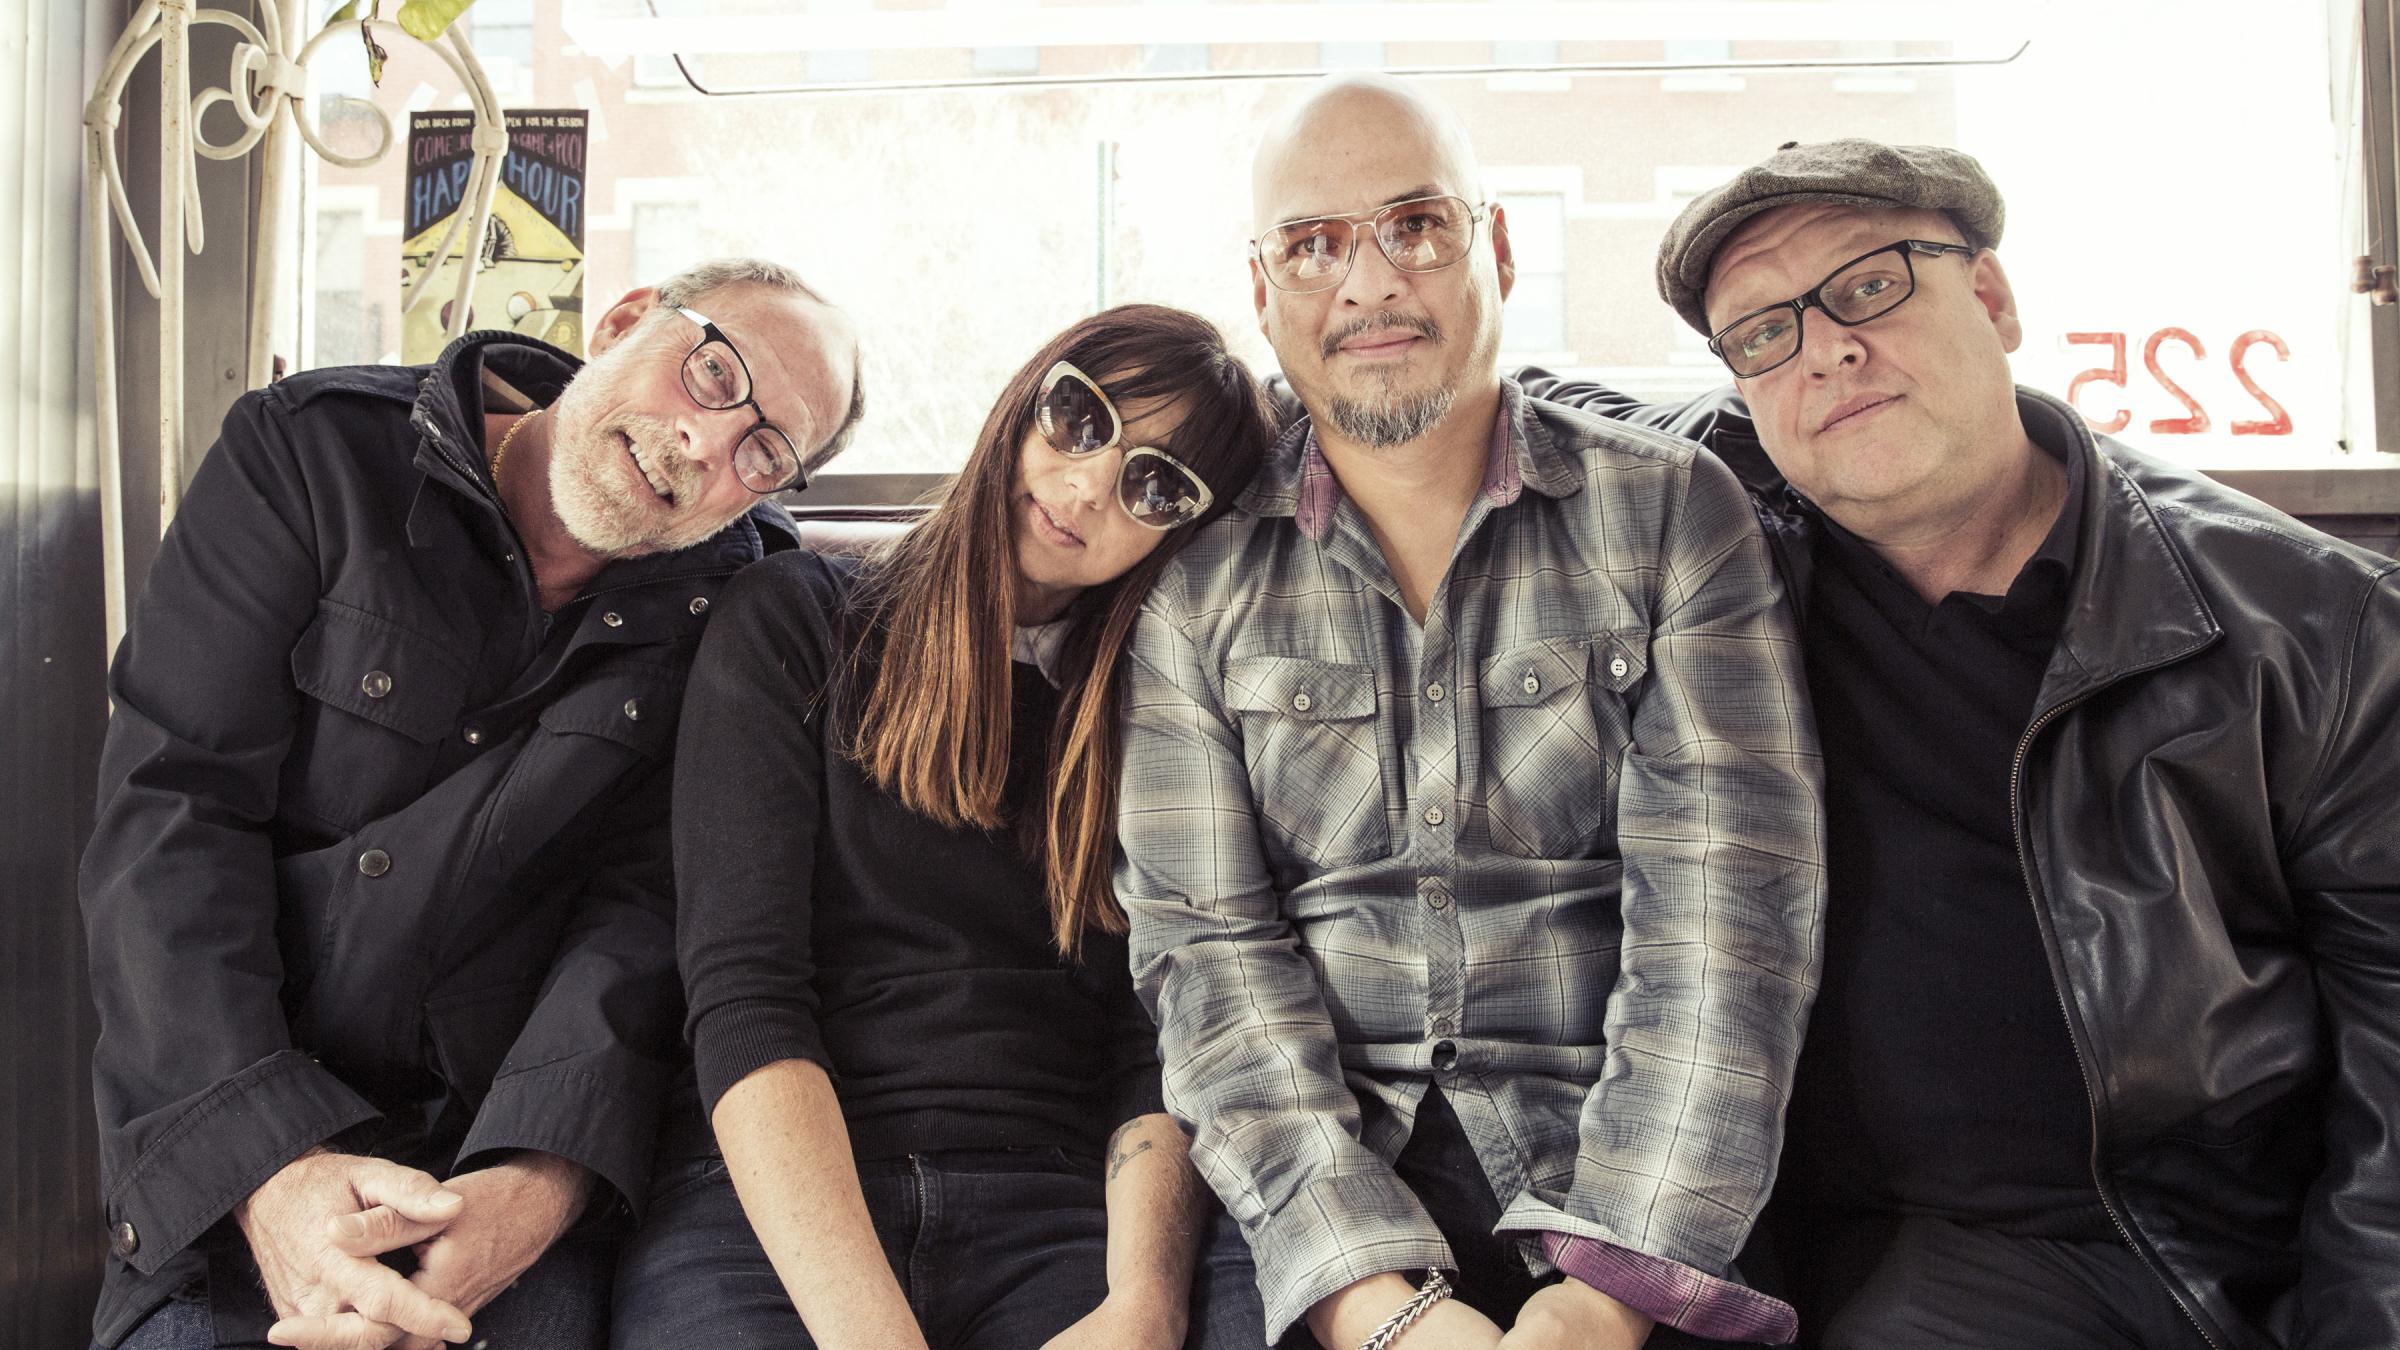 Pixies tiene un nuevo disco - Cúsica Plus